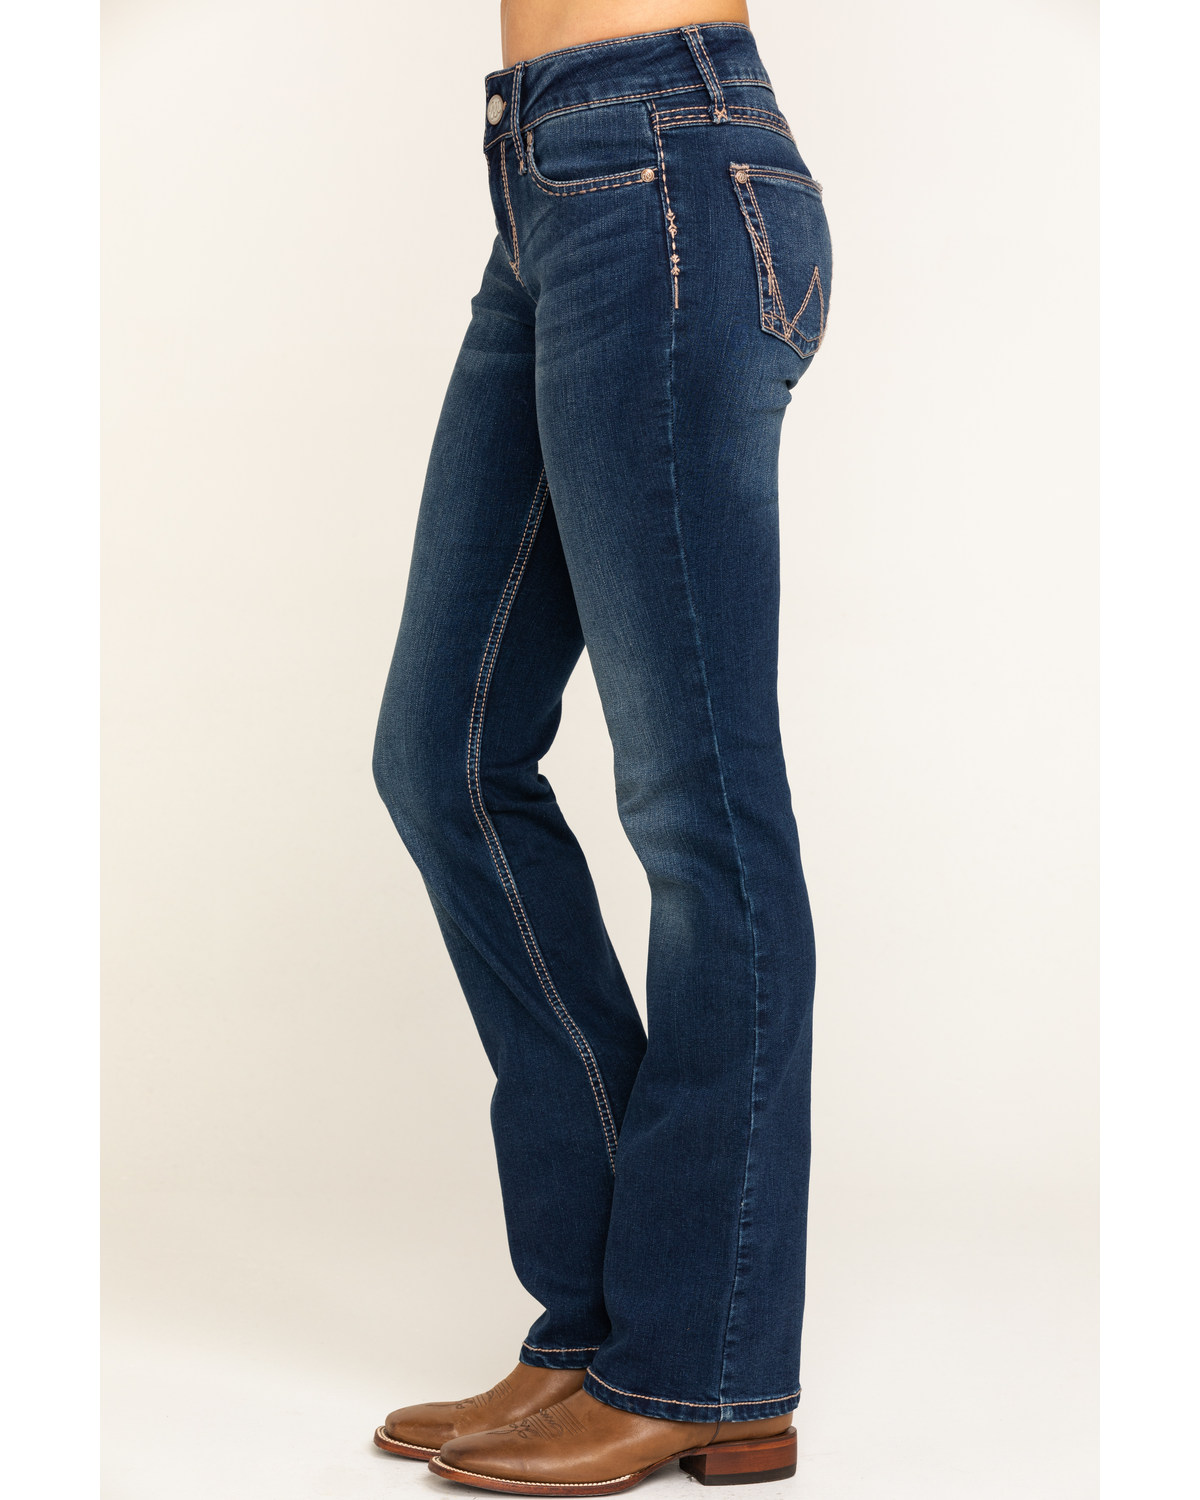 Wrangler Women's Dark Wash Retro Mae Jeans Indigo 9W x 34L - image 3 of 7